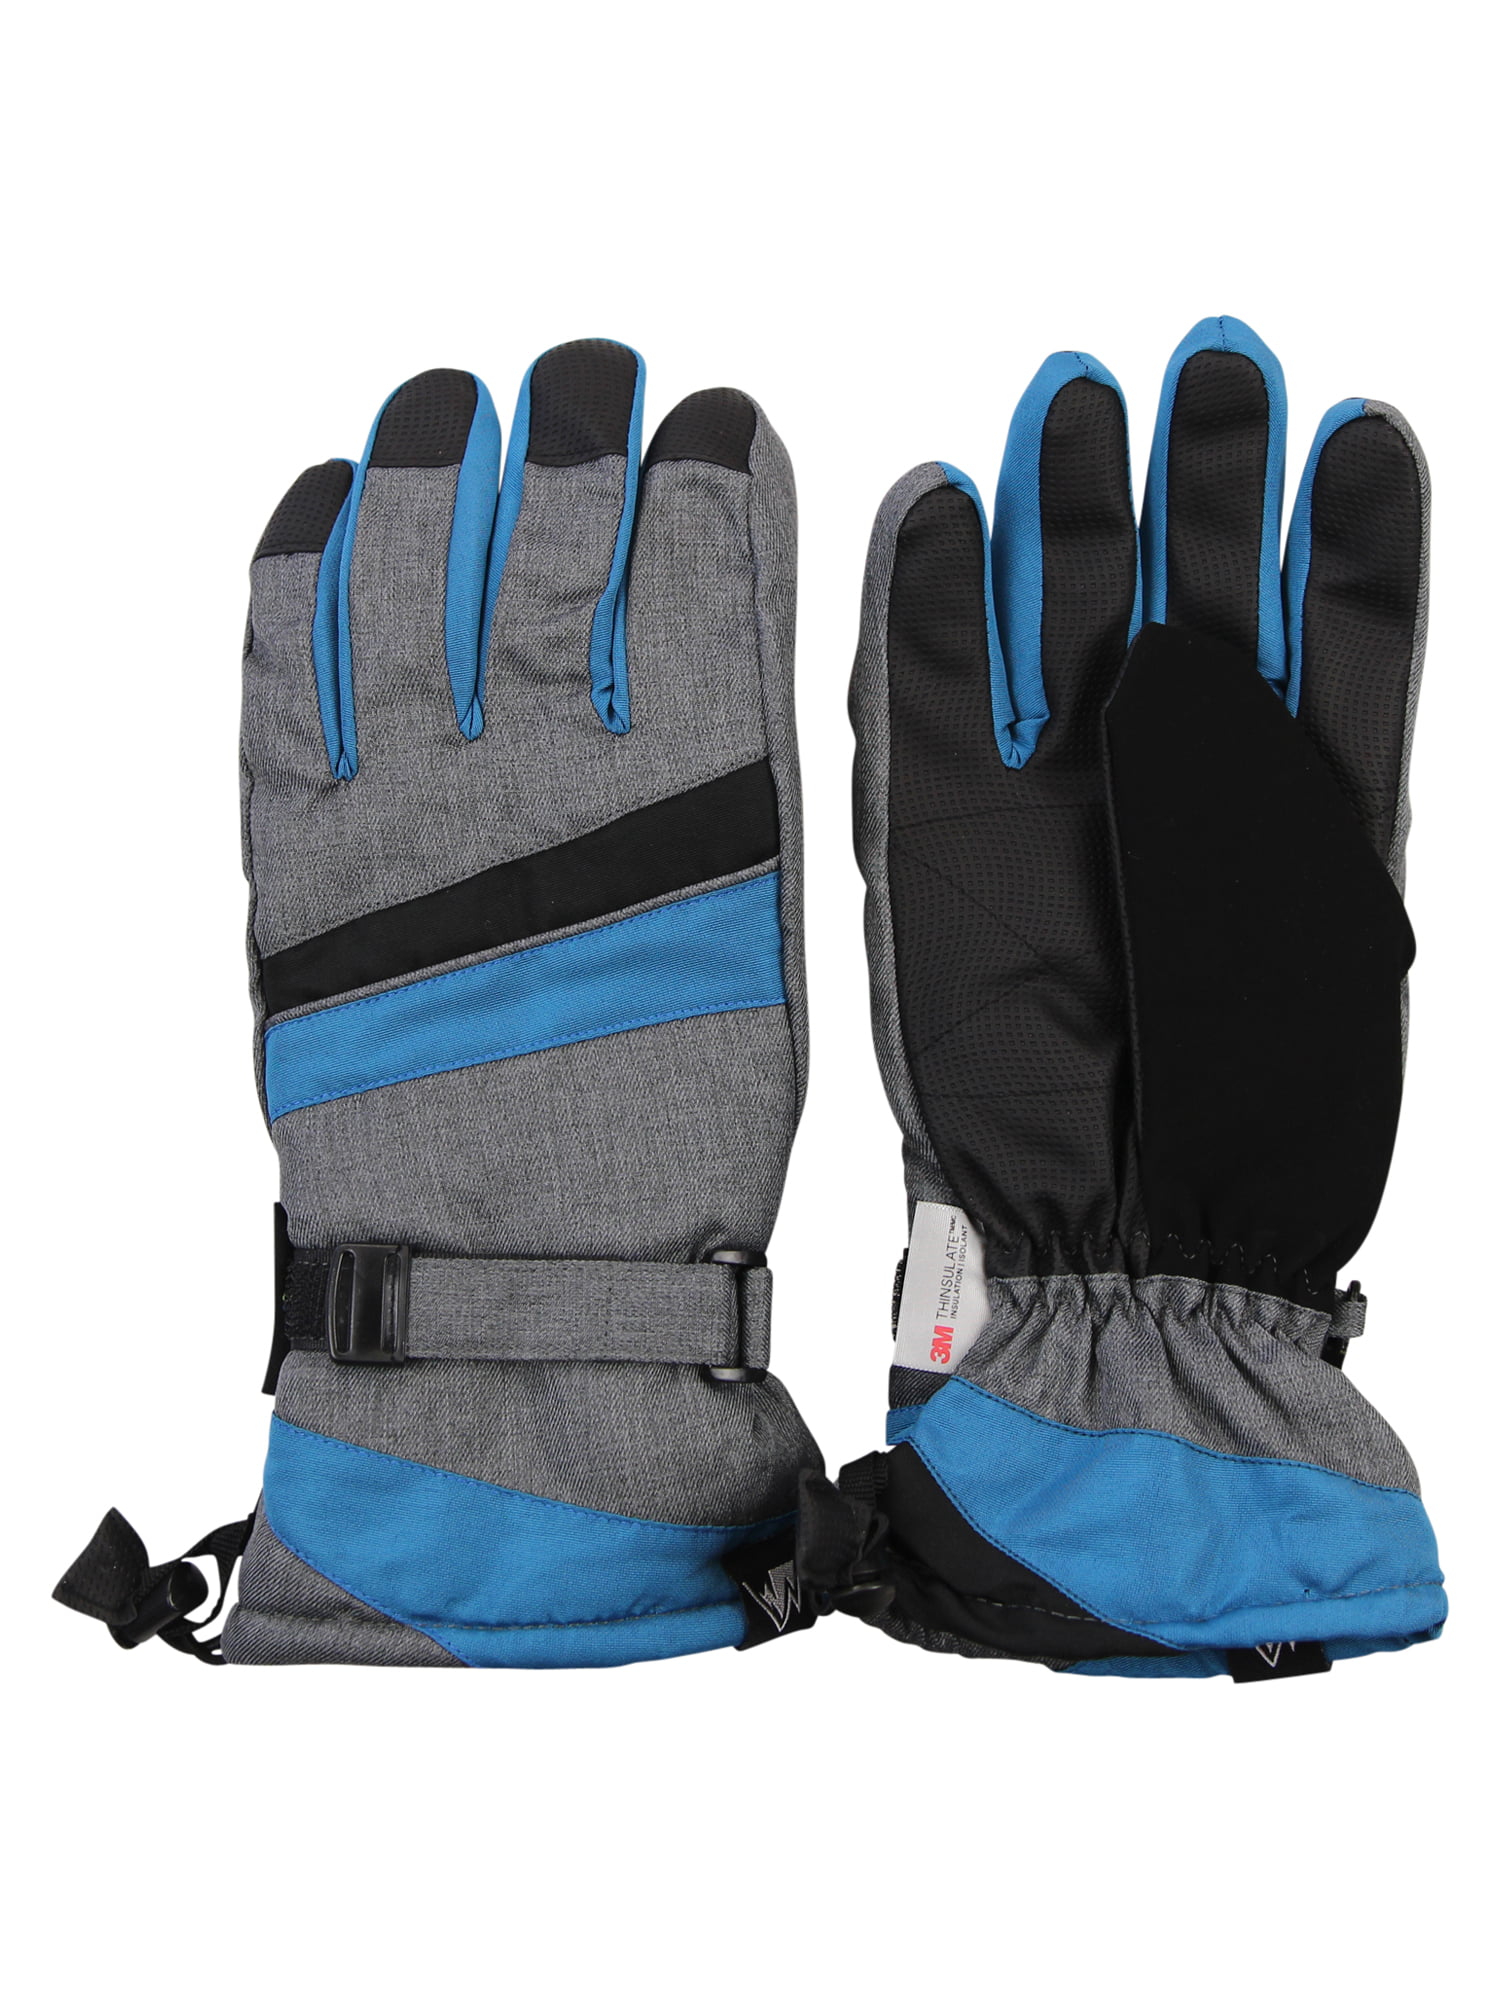 Women's Winter Snow Thinsulate Waterproof Ski Mittens Snowboard Gloves 